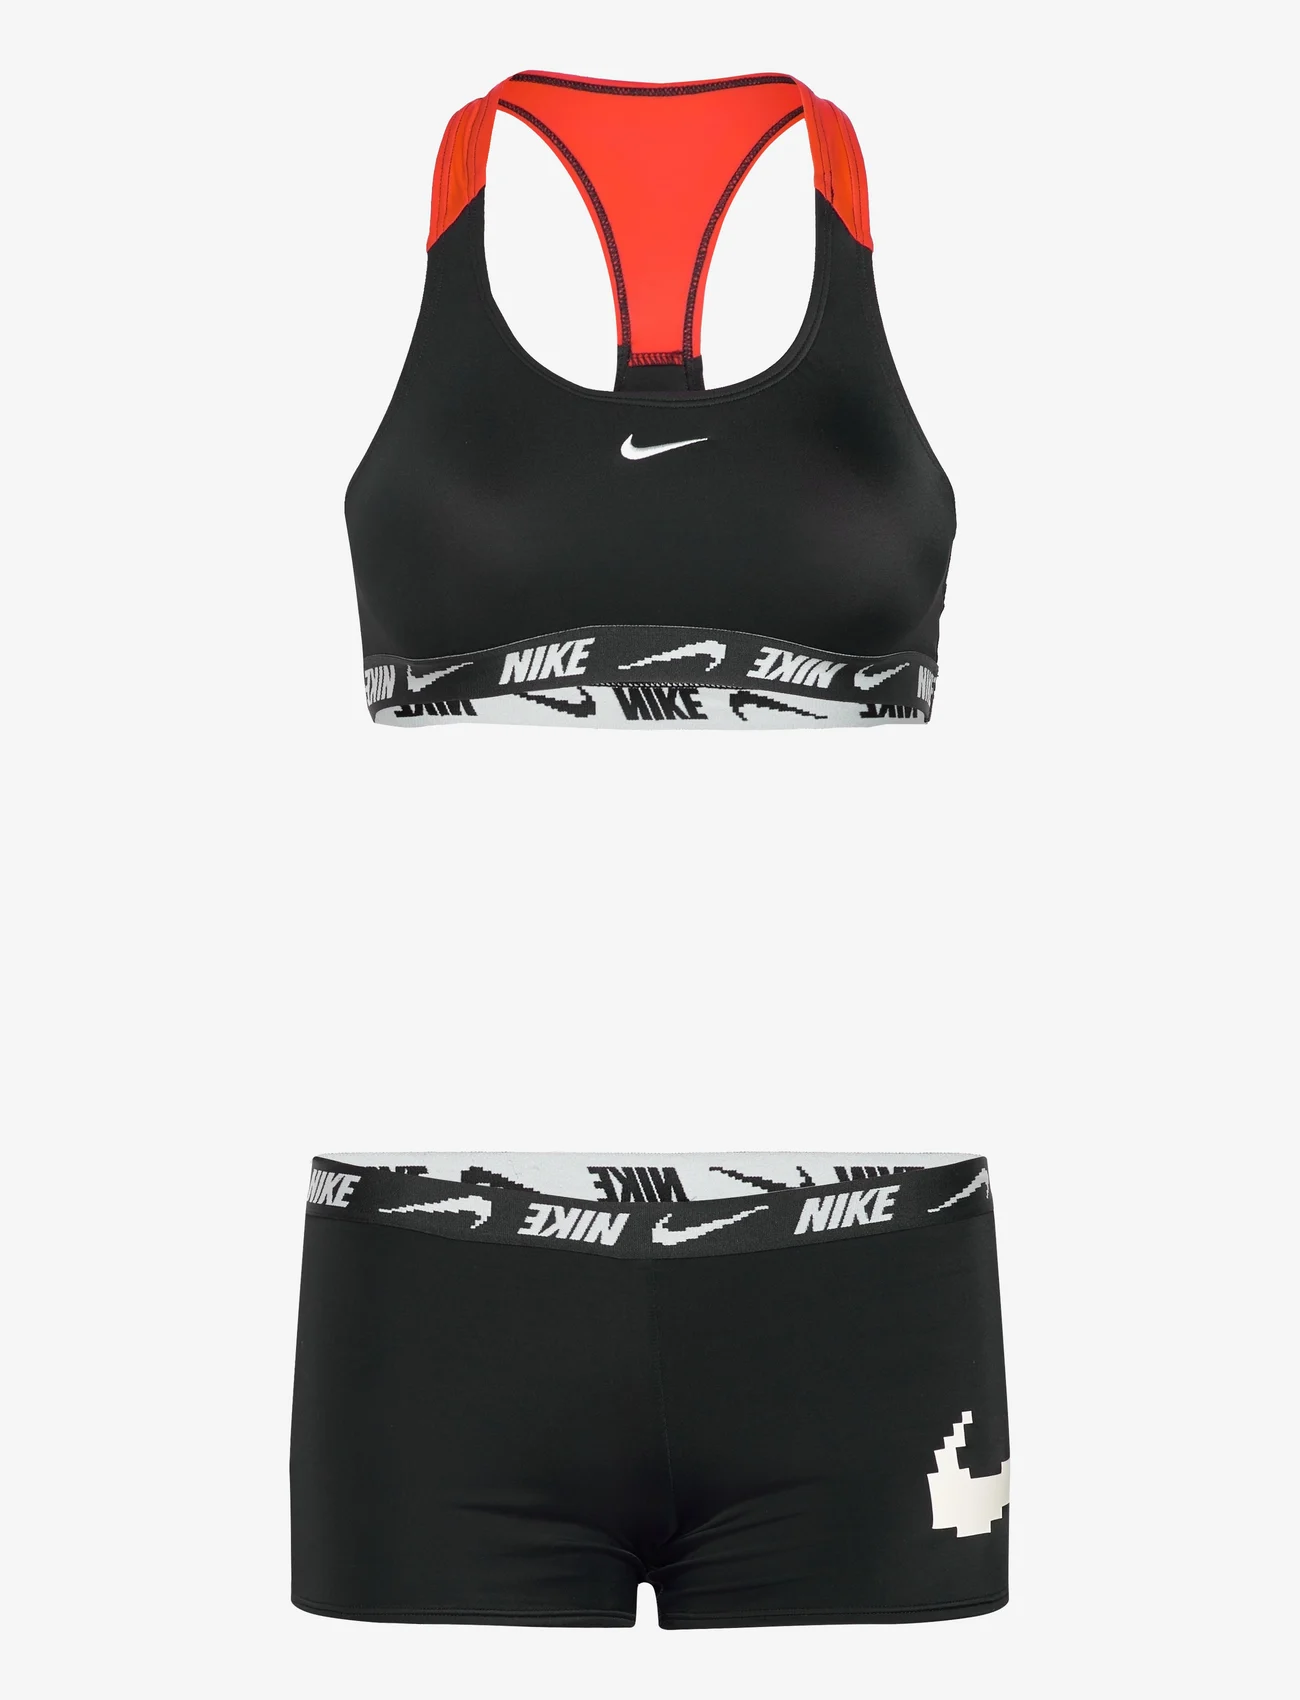 NIKE SWIM - Nike G Racerback Bikini Set - sommerschnäppchen - black - 0